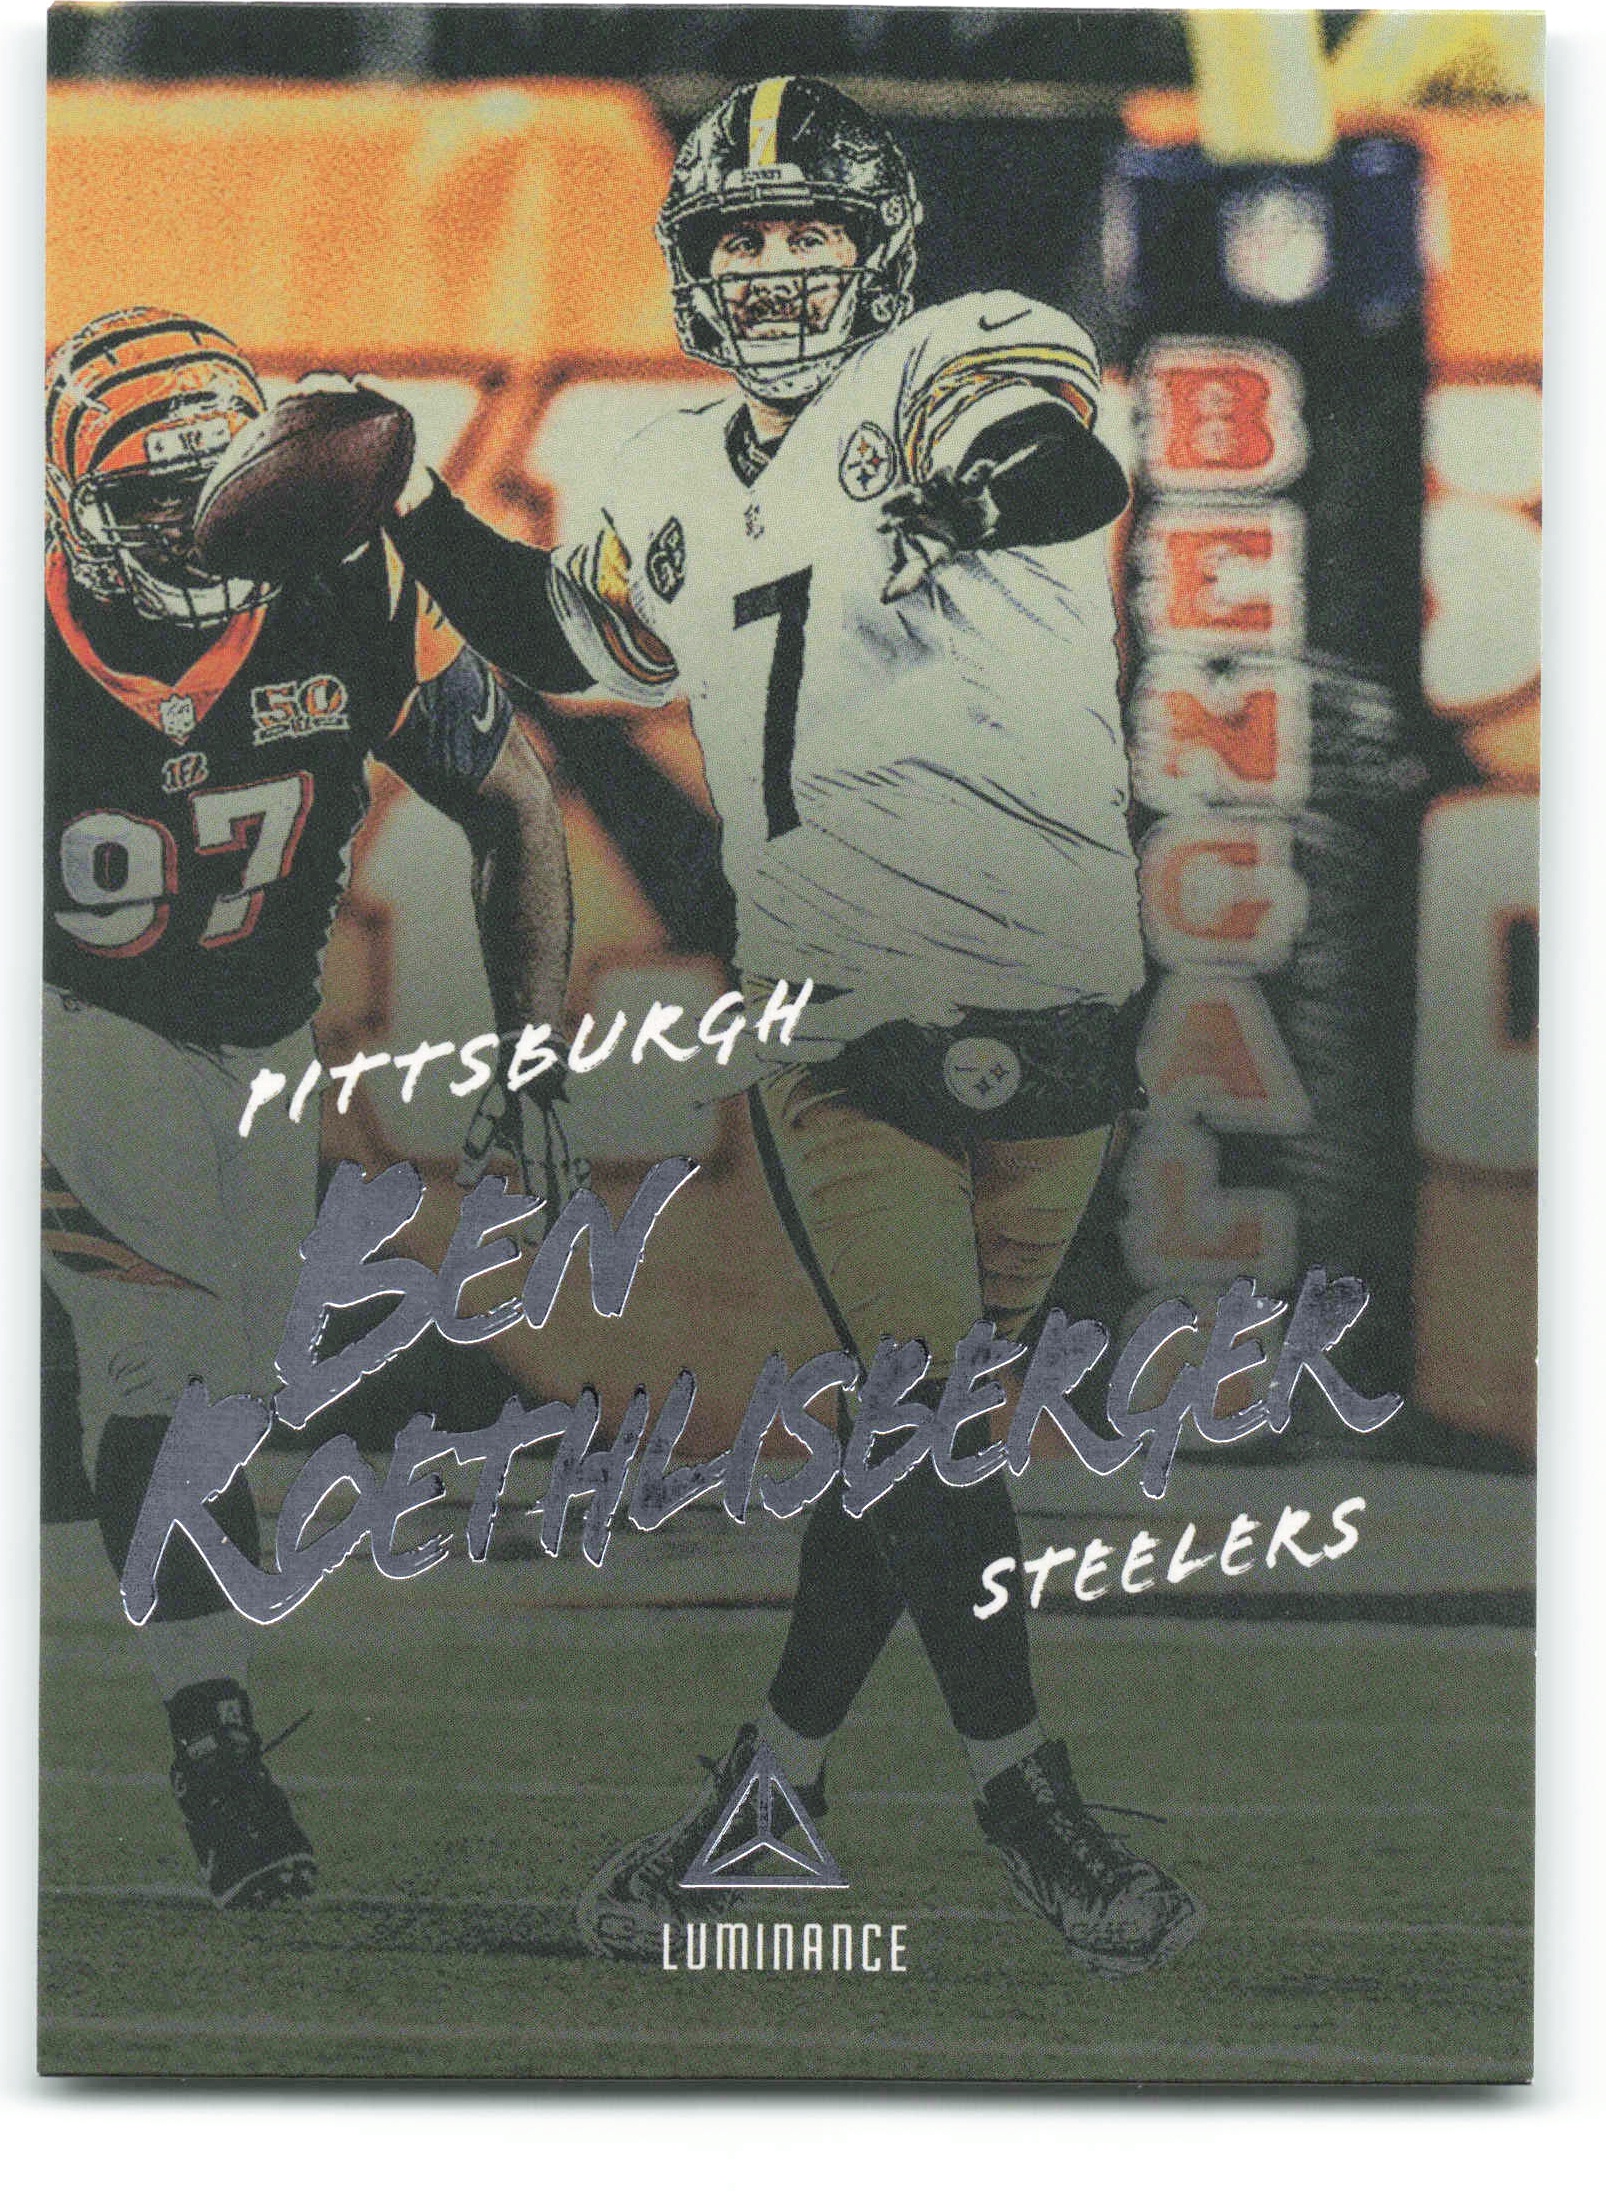 2018 Panini Luminance #87 Ben Roethlisberger Pittsburgh Steelers NFL Football Trading Card